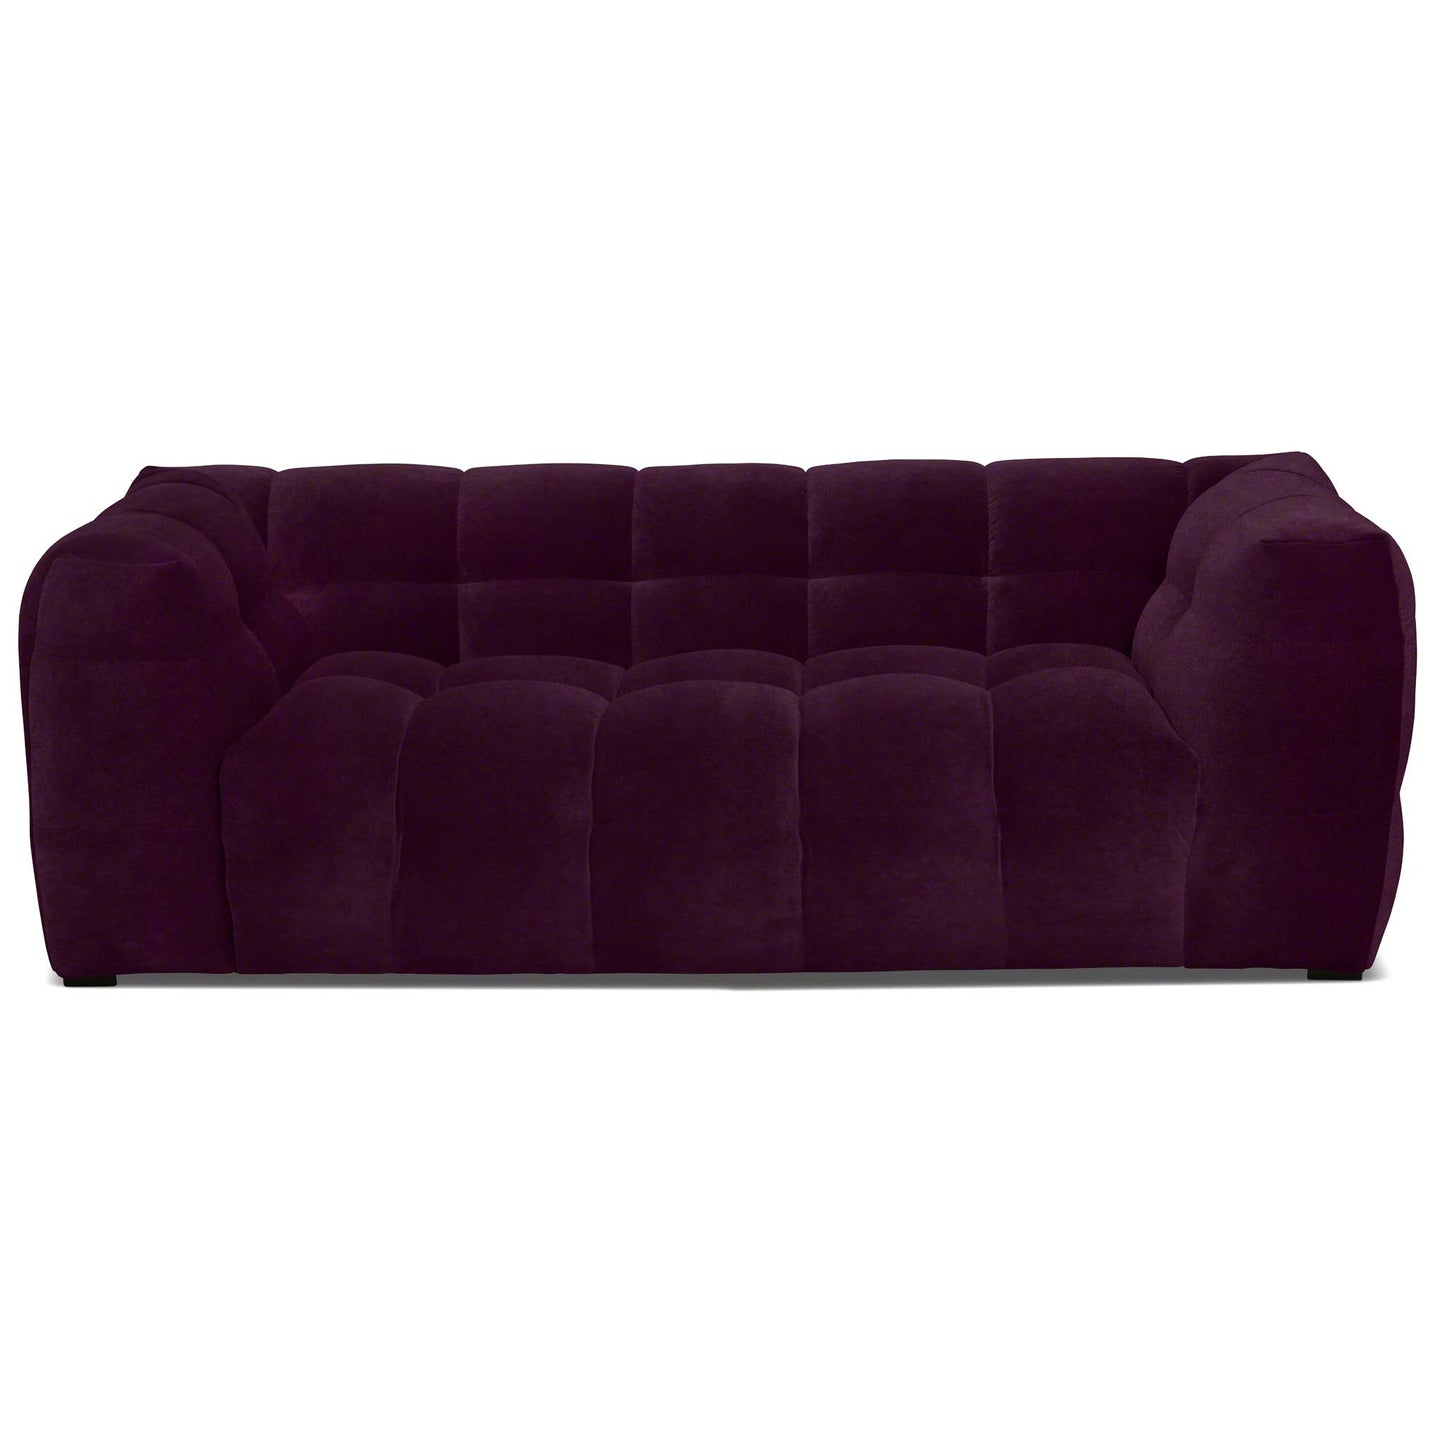 Mindre 2-sits soffa i lila sammet av prima kvalitet. Bubbligt designspråk.